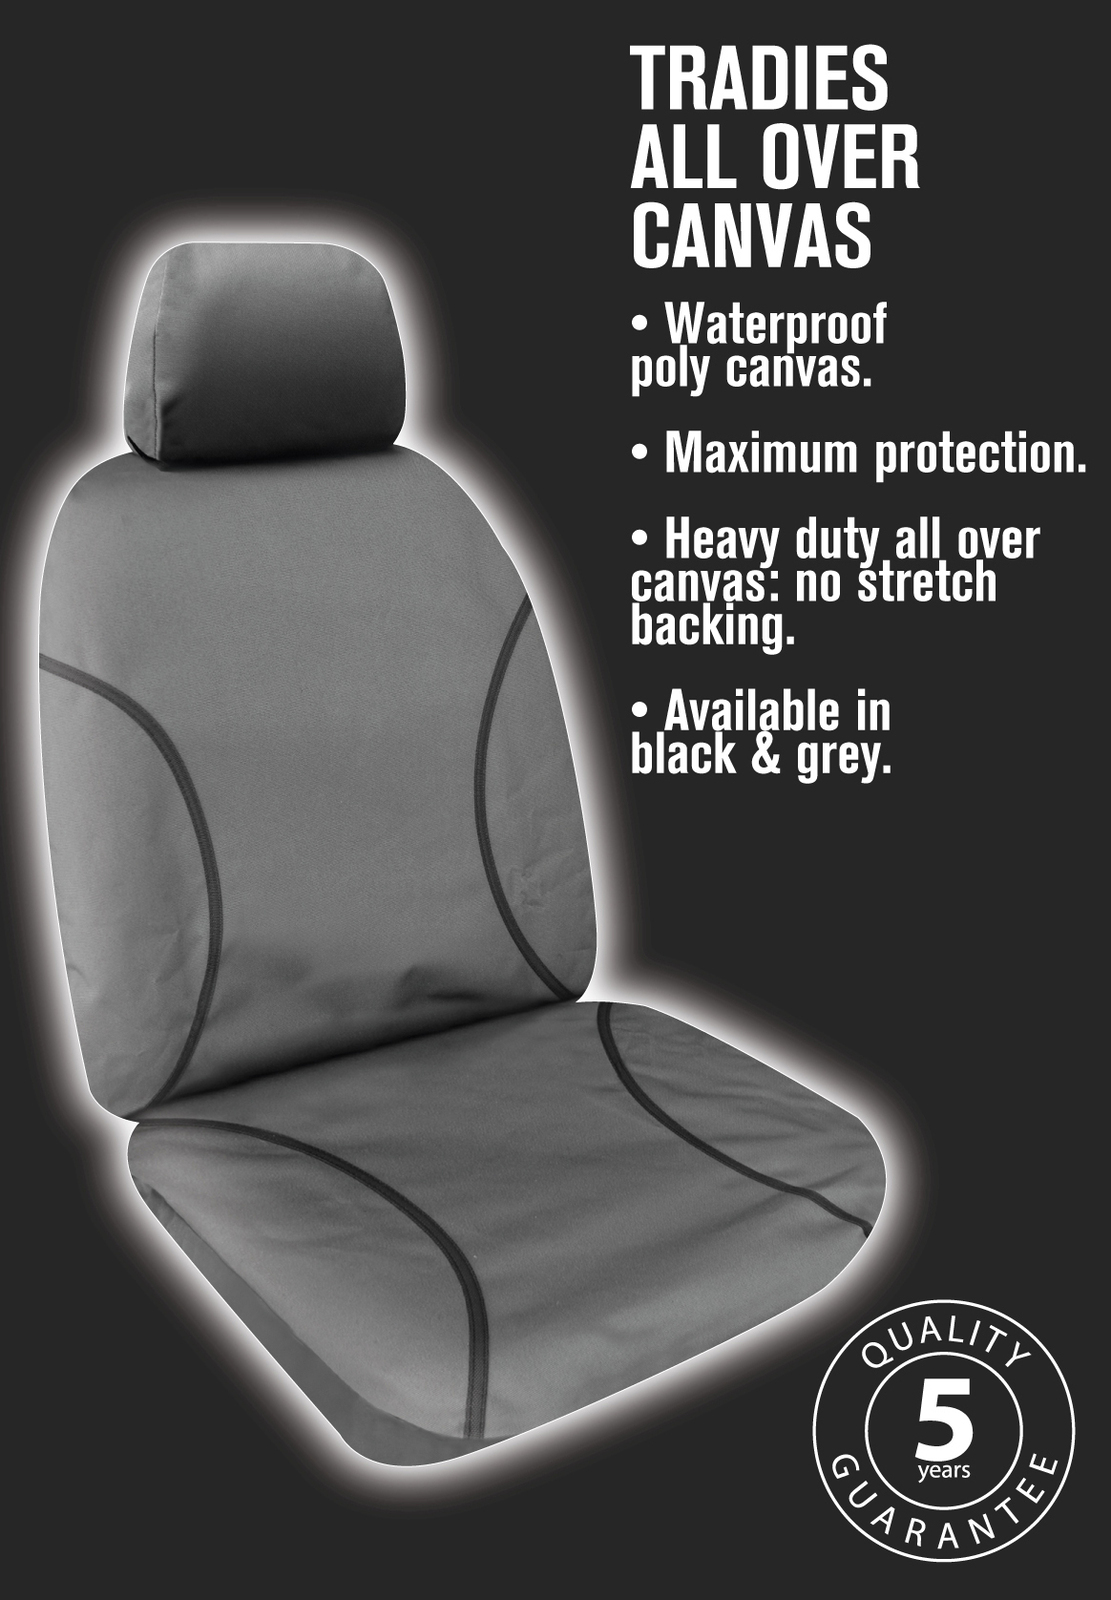 SPERLING SEAT COVER MIDDLE G2B (GETAWAY NEOPRENE BLACK)